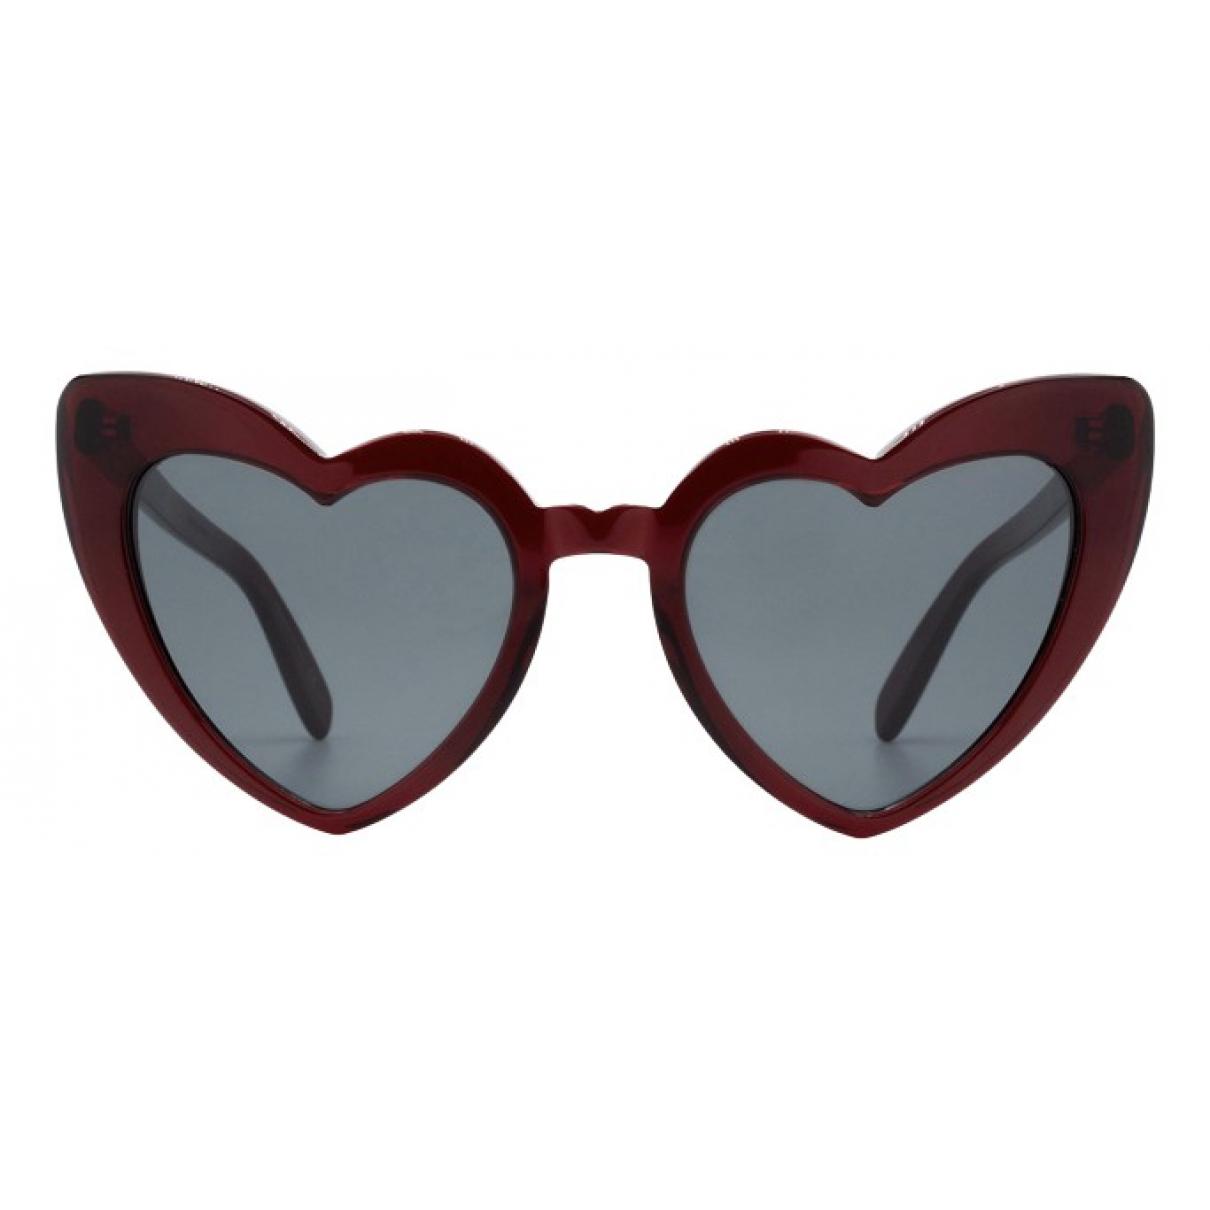 Loulou sunglasses Saint Laurent